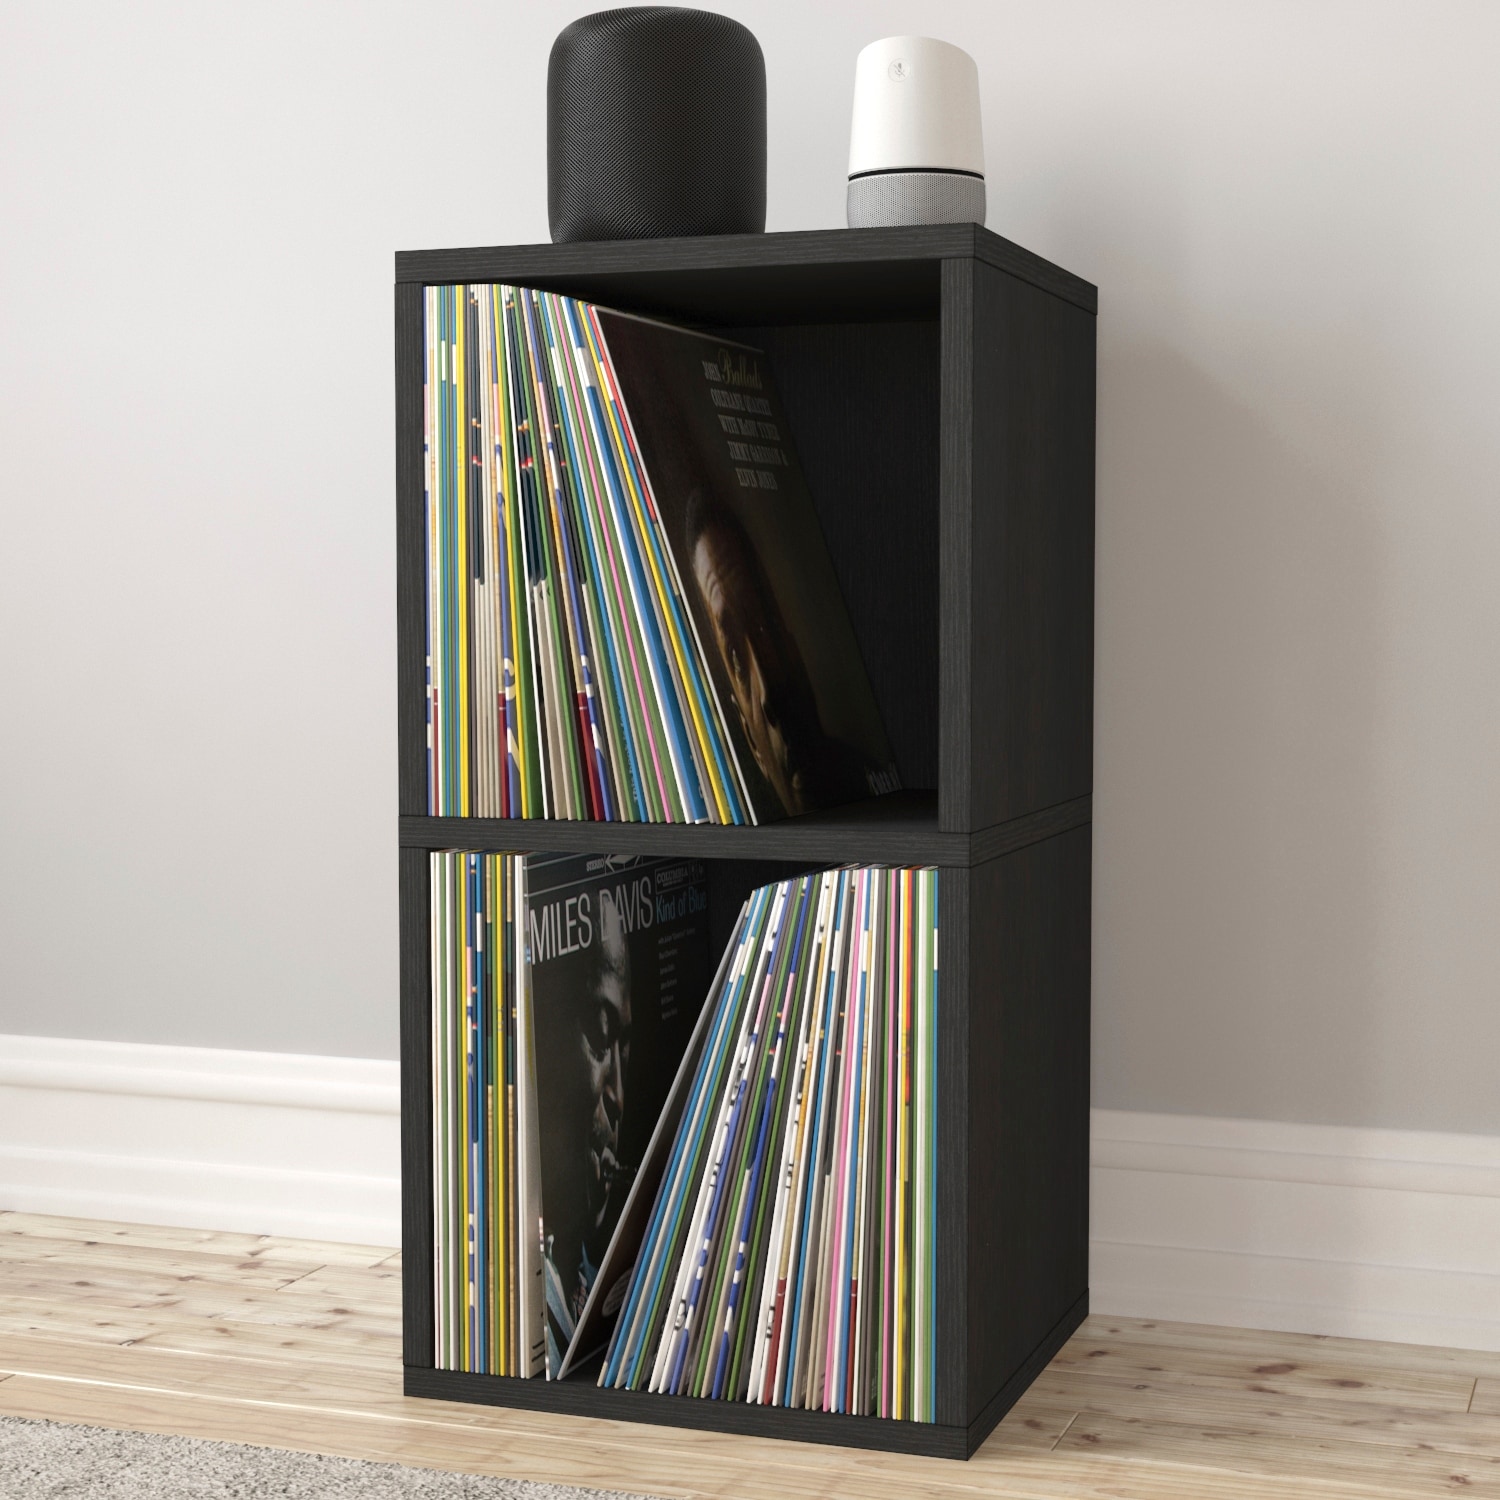 https://ak1.ostkcdn.com/images/products/is/images/direct/a29a79a4bec05f379c08db5a0bcd1a23cc853302/Way-Basics-2-Shelf-Cube-Book-Case%2C-Vinyl-LP-Record-Album-Storage%2C-Black.jpg